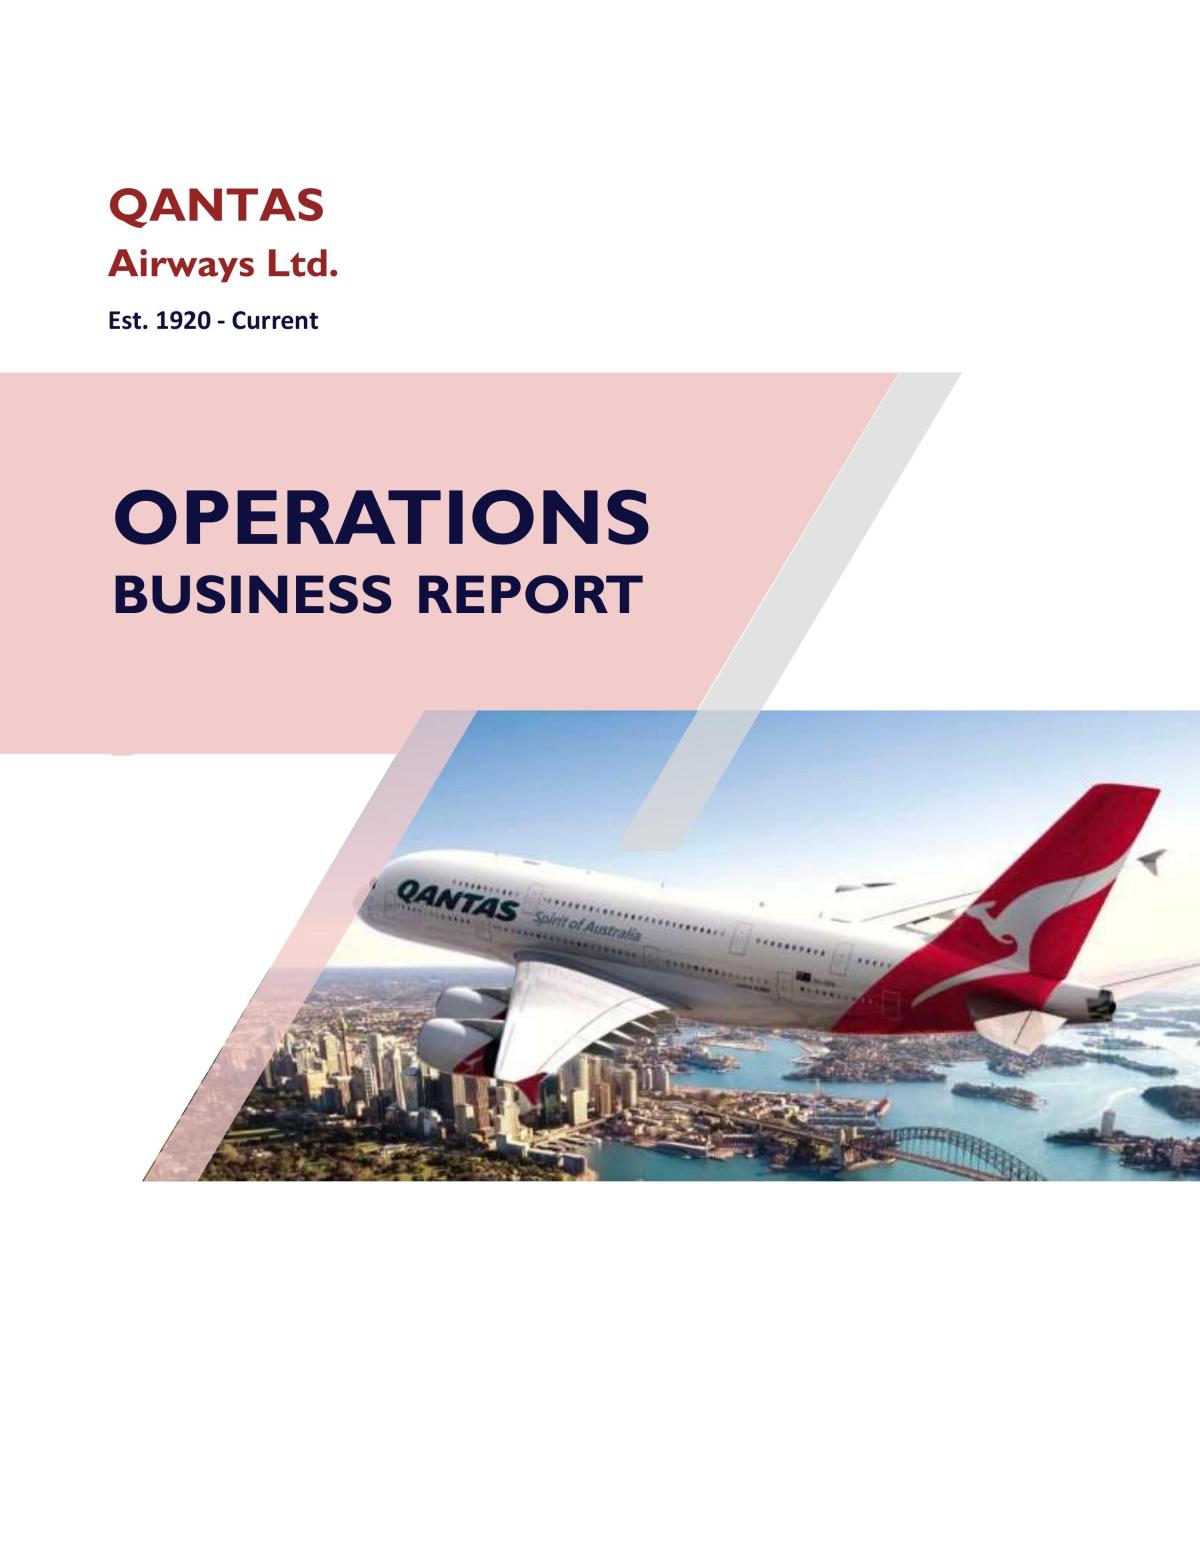 qantas business case study pdf